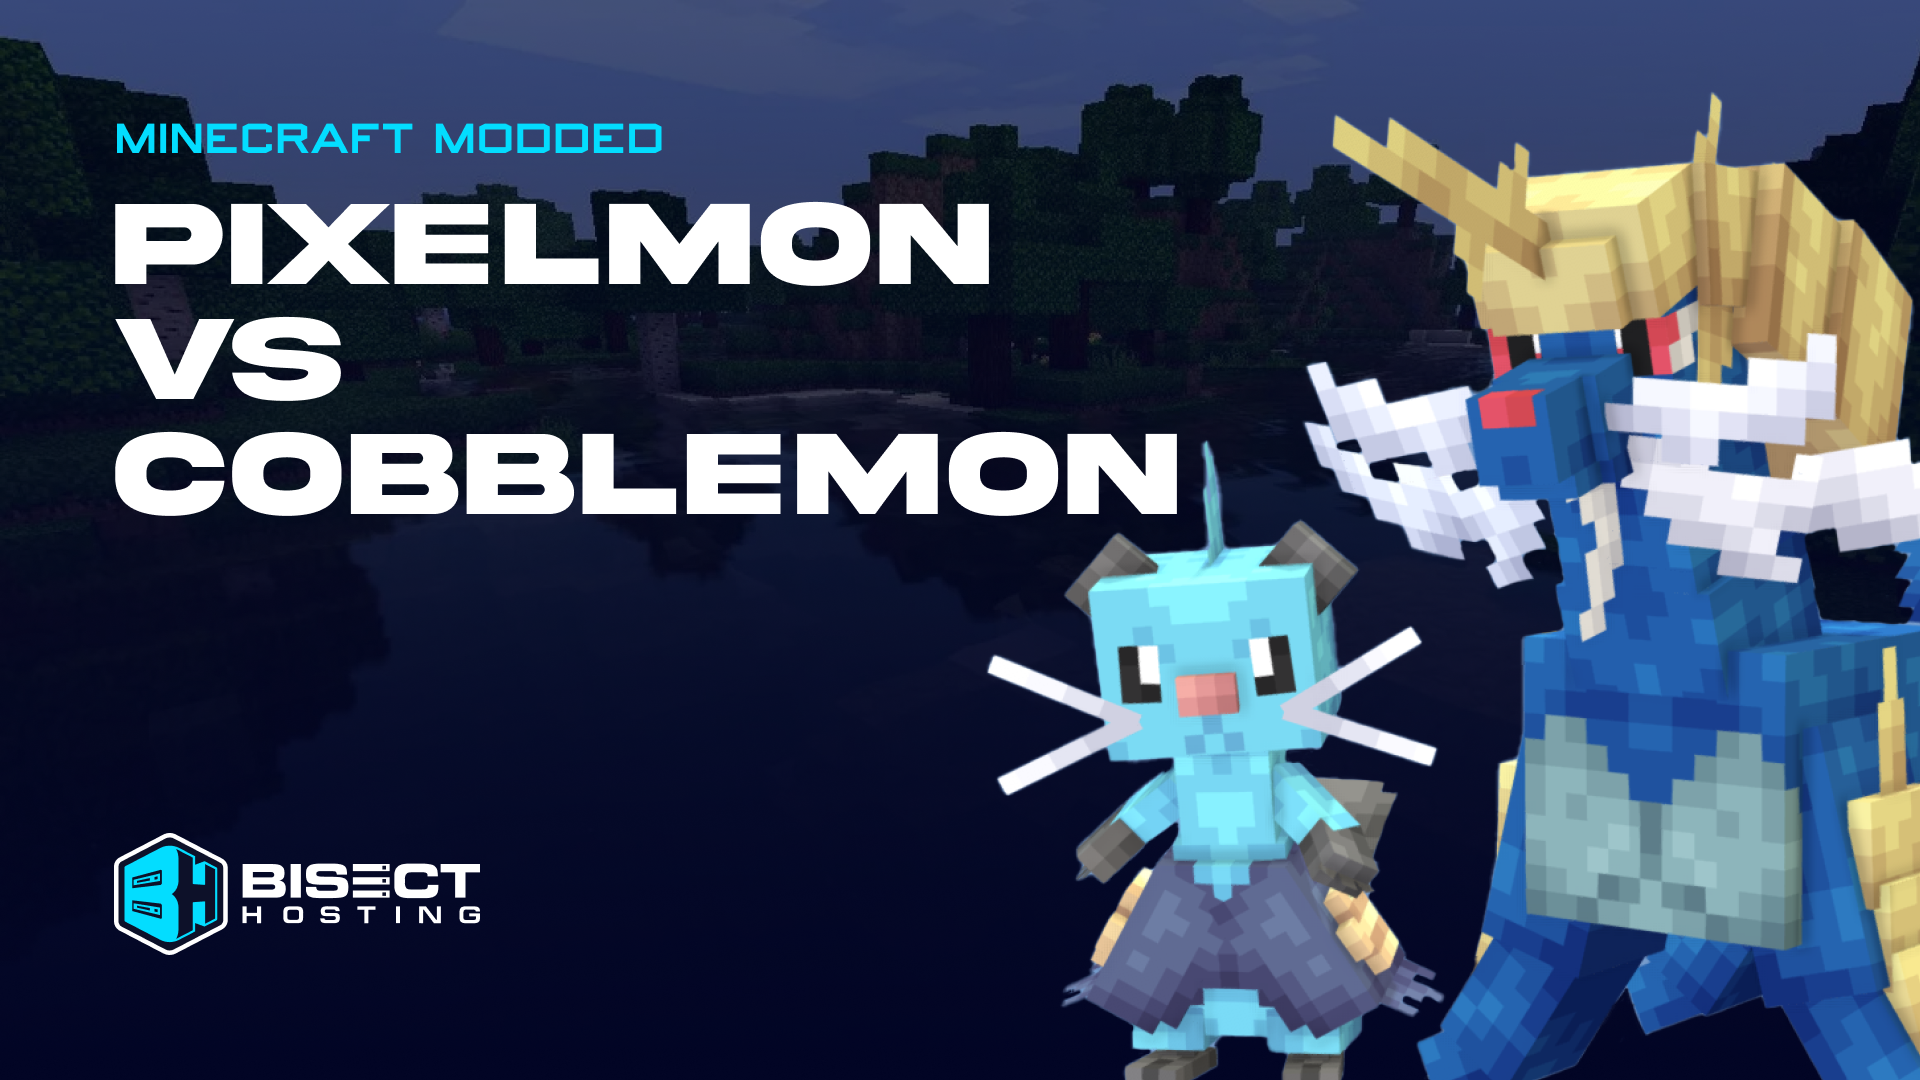 Pixelmon vs. Cobblemon: Which is better? 